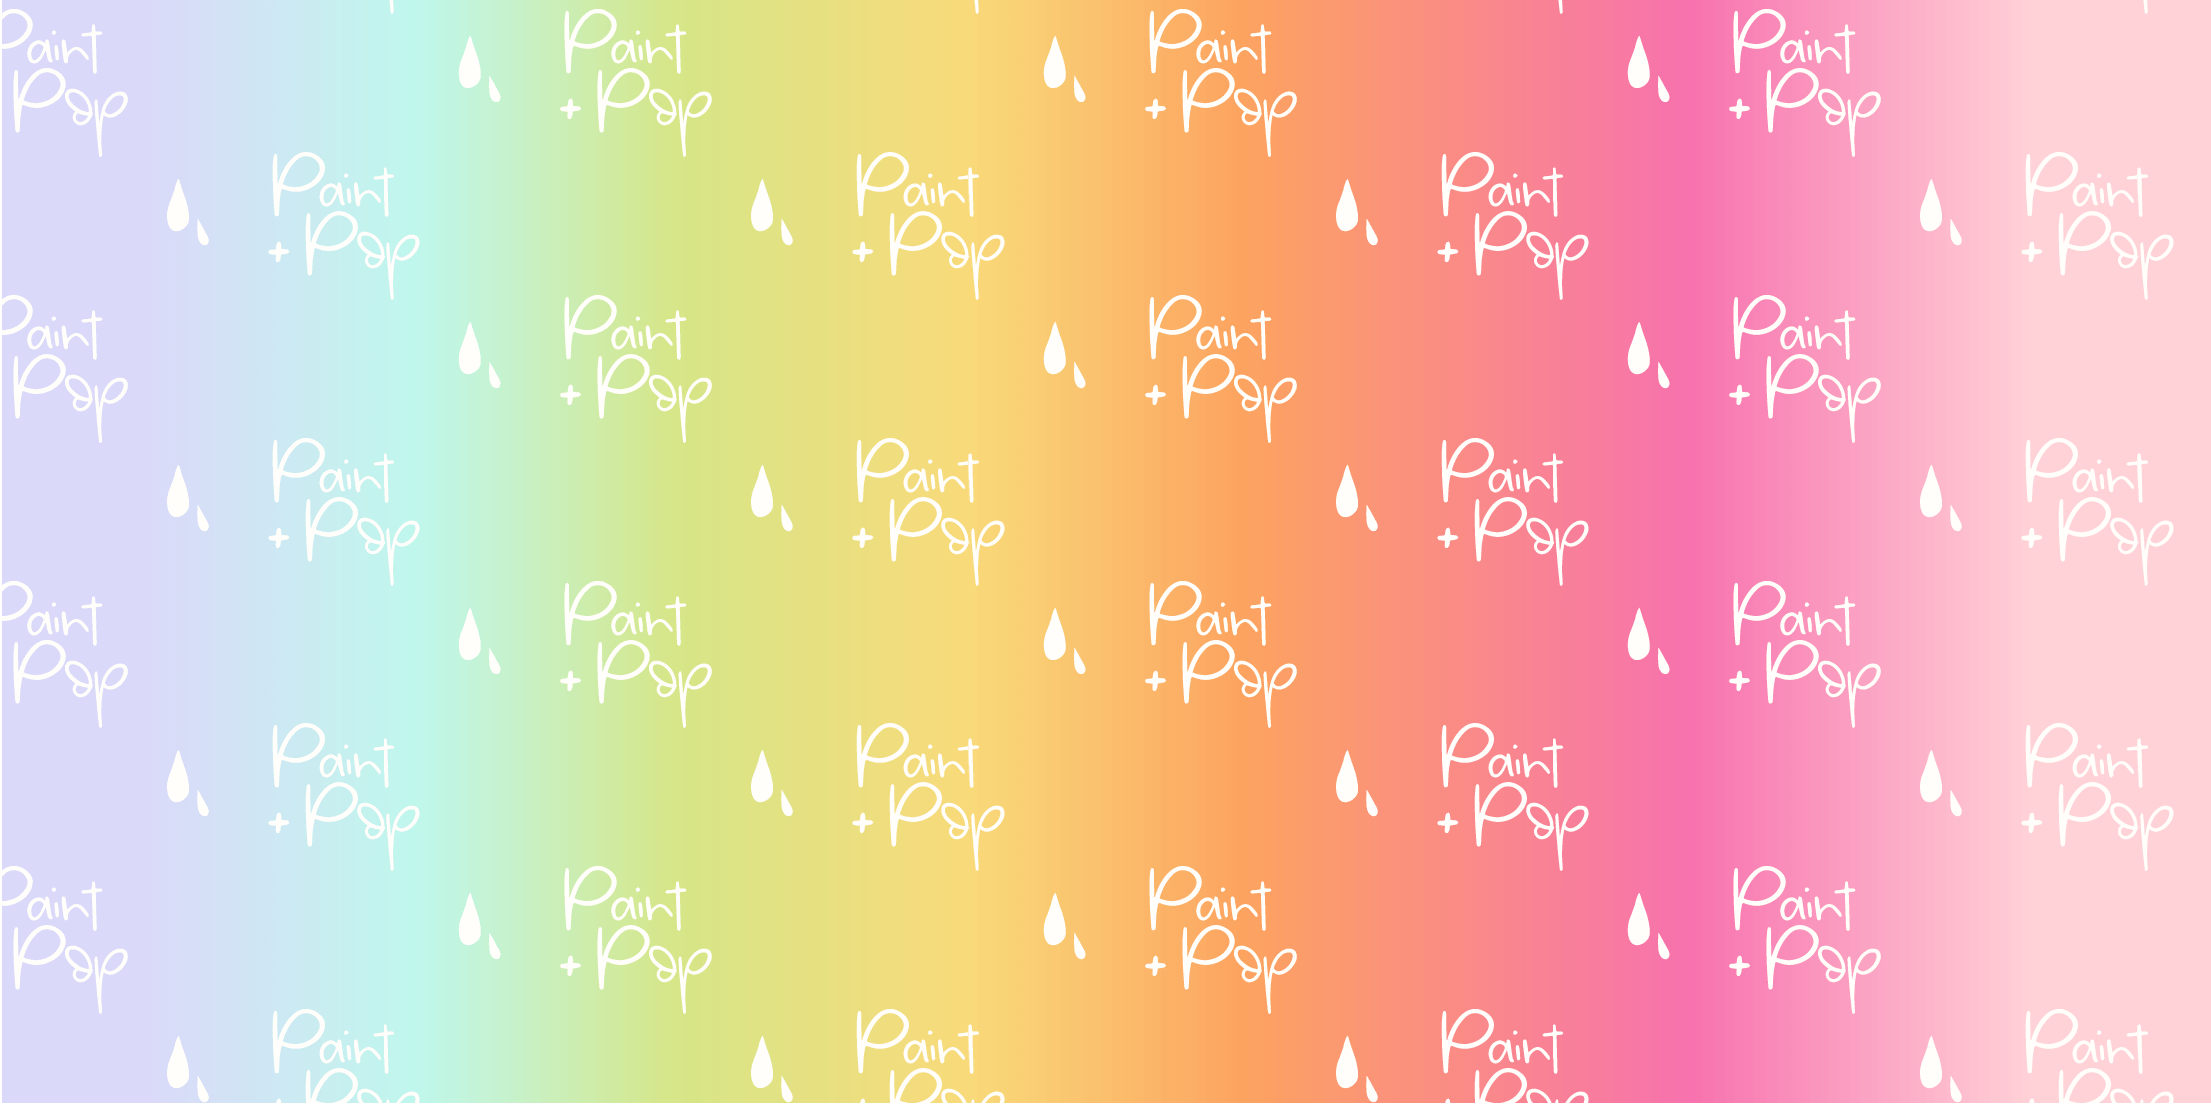 Rainbow gradient Paint + Pop stacked + logo Melbourne's favourite Face Paint + Pop Up Photobooth